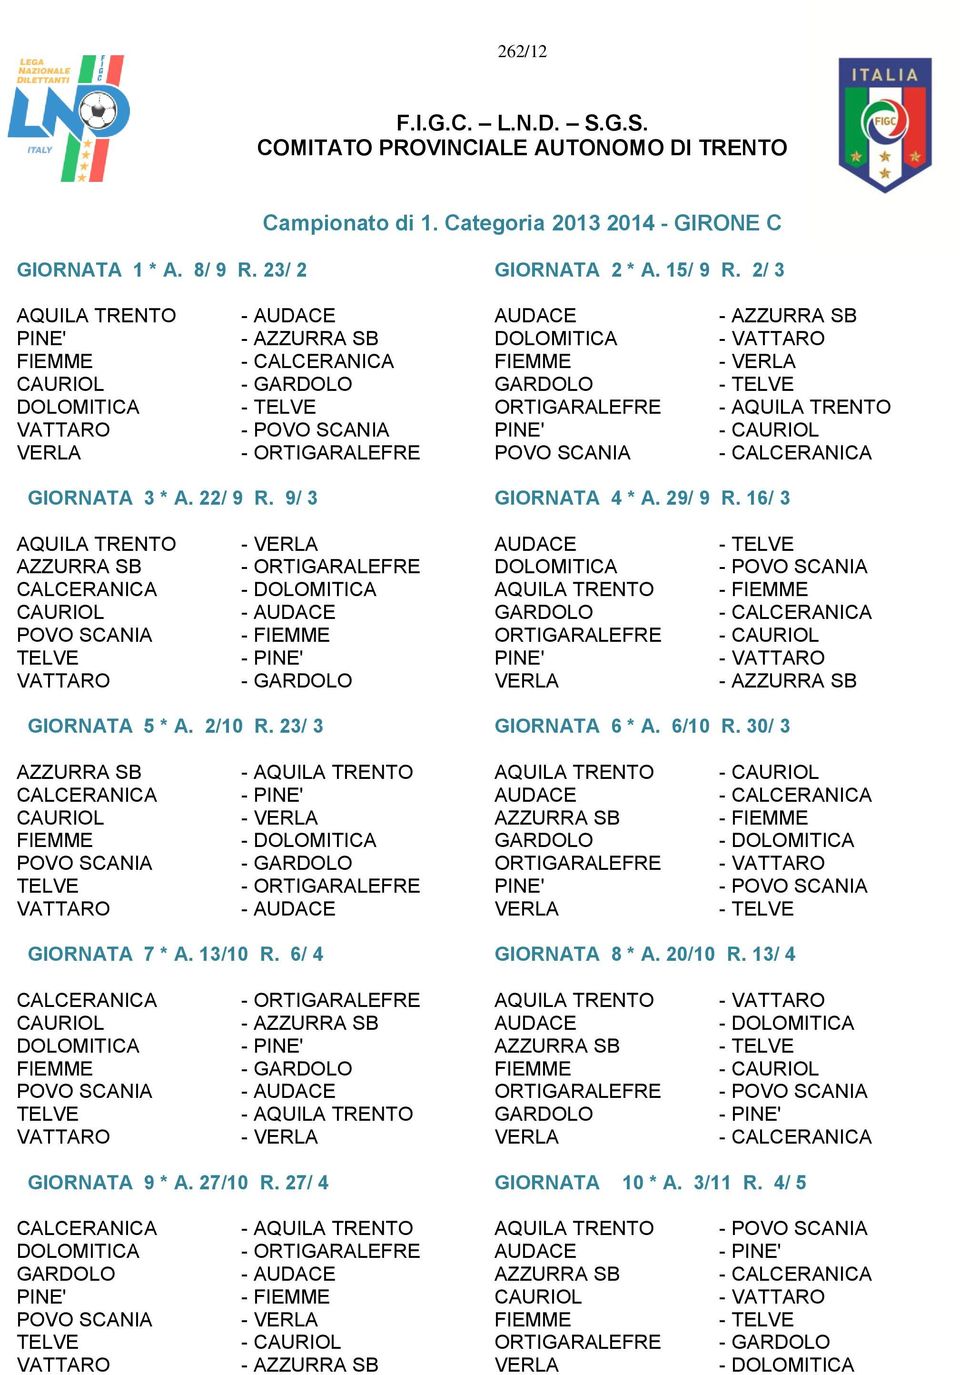 TRENTO VATTARO - POVO SCANIA PINE' - CAURIOL VERLA - ORTIGARALEFRE POVO SCANIA - CALCERANICA GIORNATA 3 * A. 22/ 9 R. 9/ 3 GIORNATA 4 * A. 29/ 9 R.